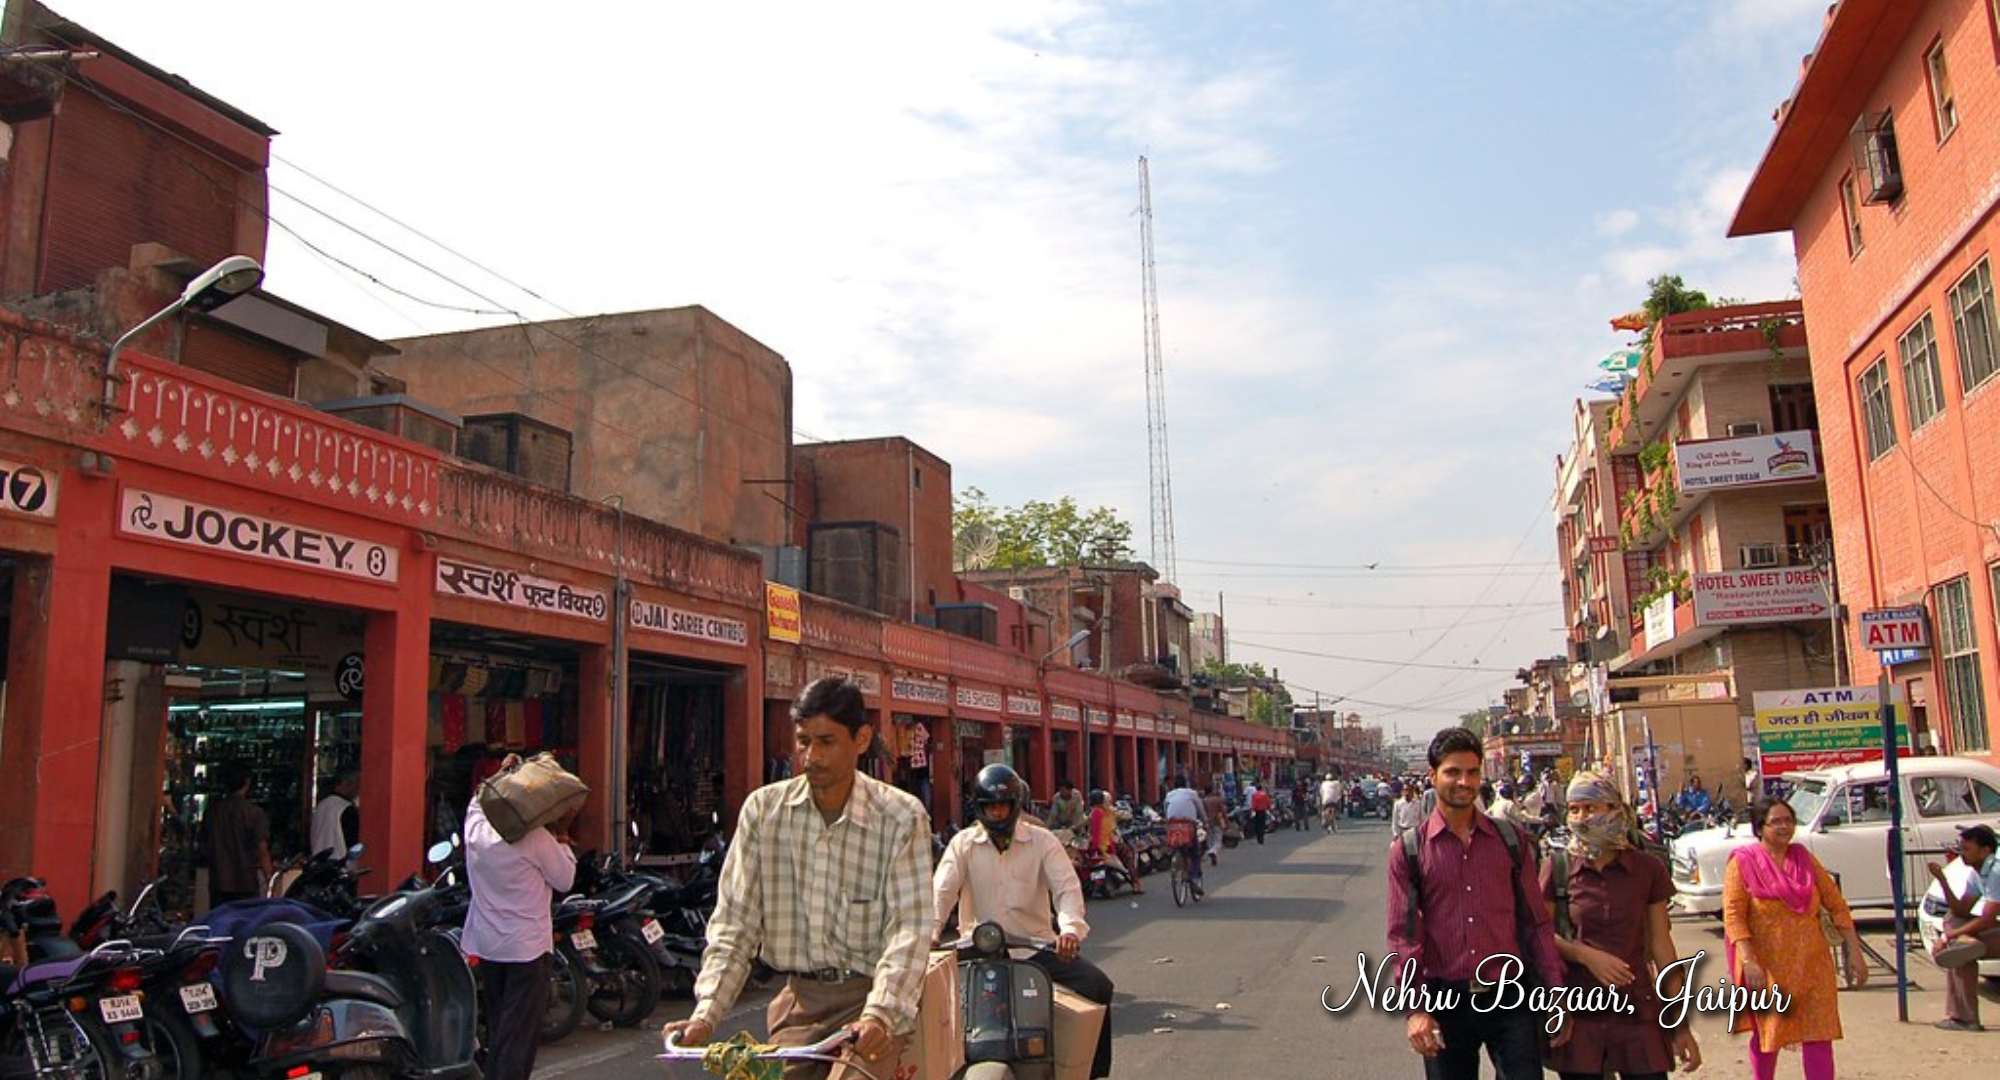 nehru bazaar jaipur, top 12 shopping places to visit in jaipur, jaipur shopping places, jaipur shopping markets, jodhpur cabs,